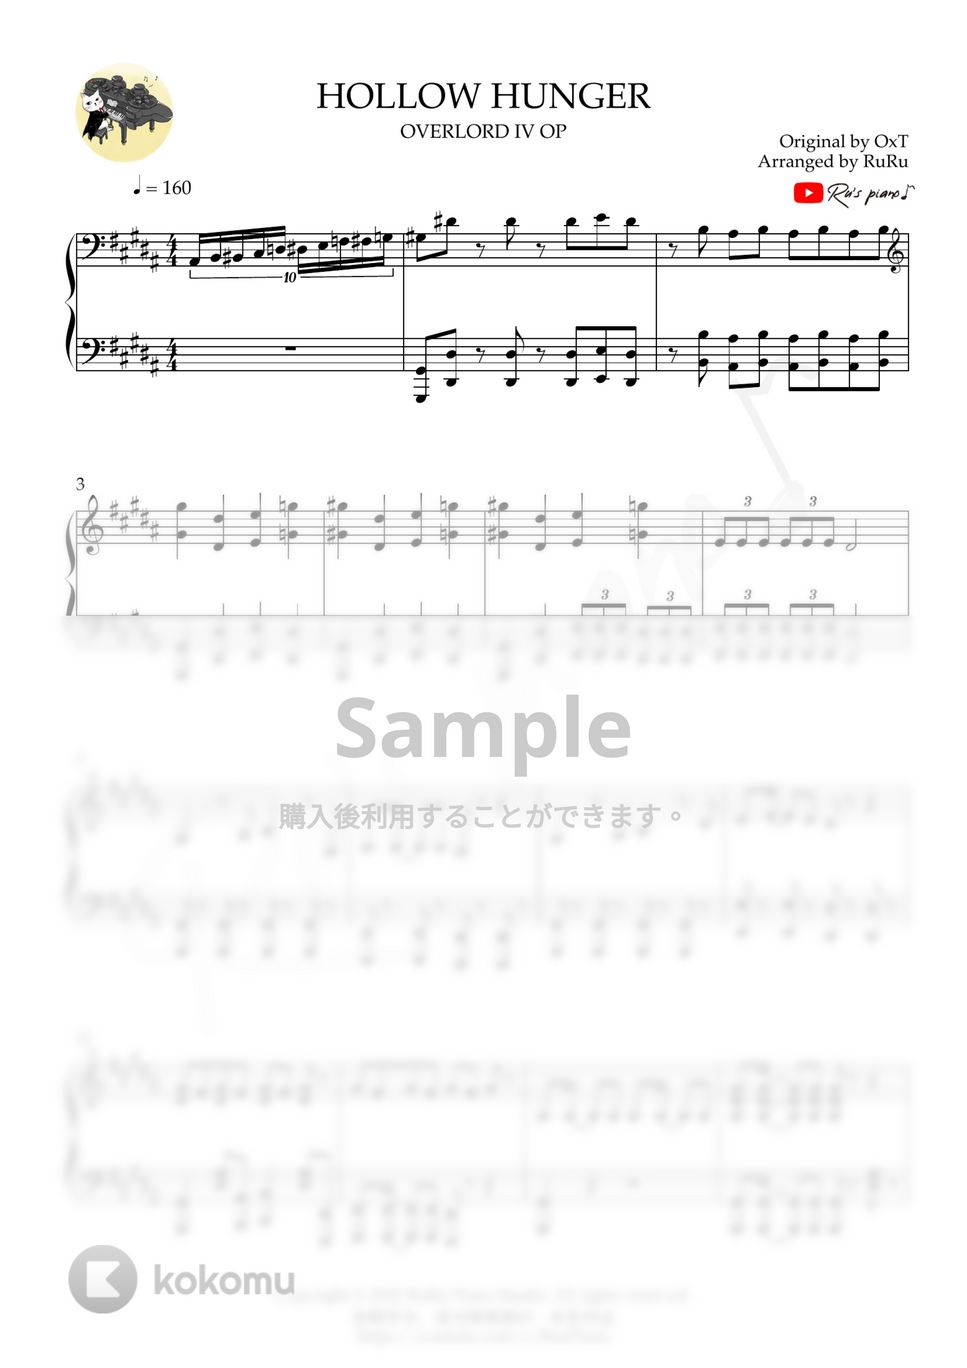 不死者之王 Overlord IV OP - HOLLOW HUNGER (1’30’’ ver.) by Ru's Piano